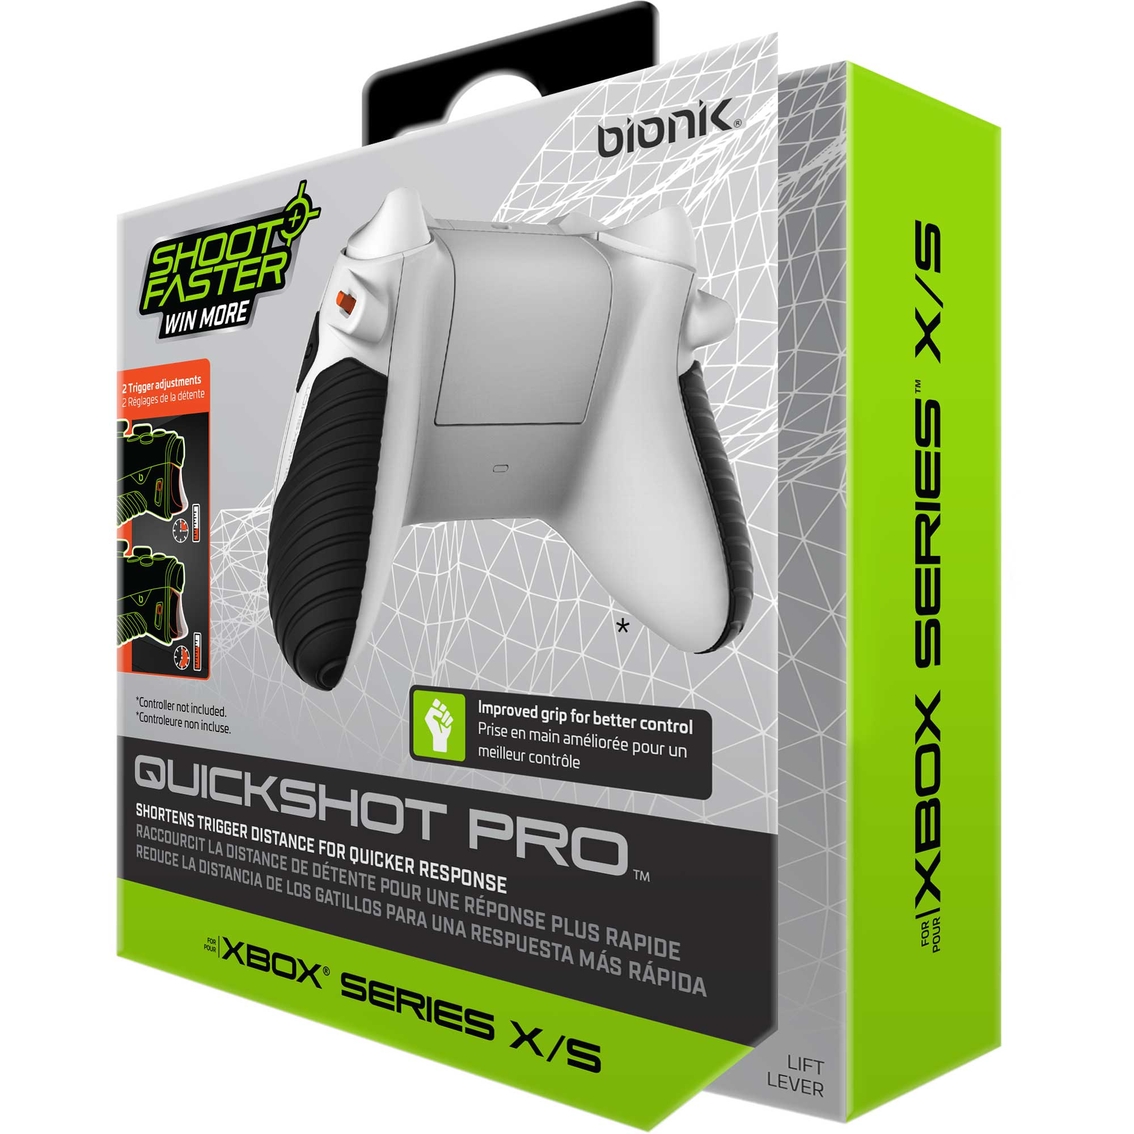 bionik Quickshot Pro for Xbox Series S/X - Image 4 of 7